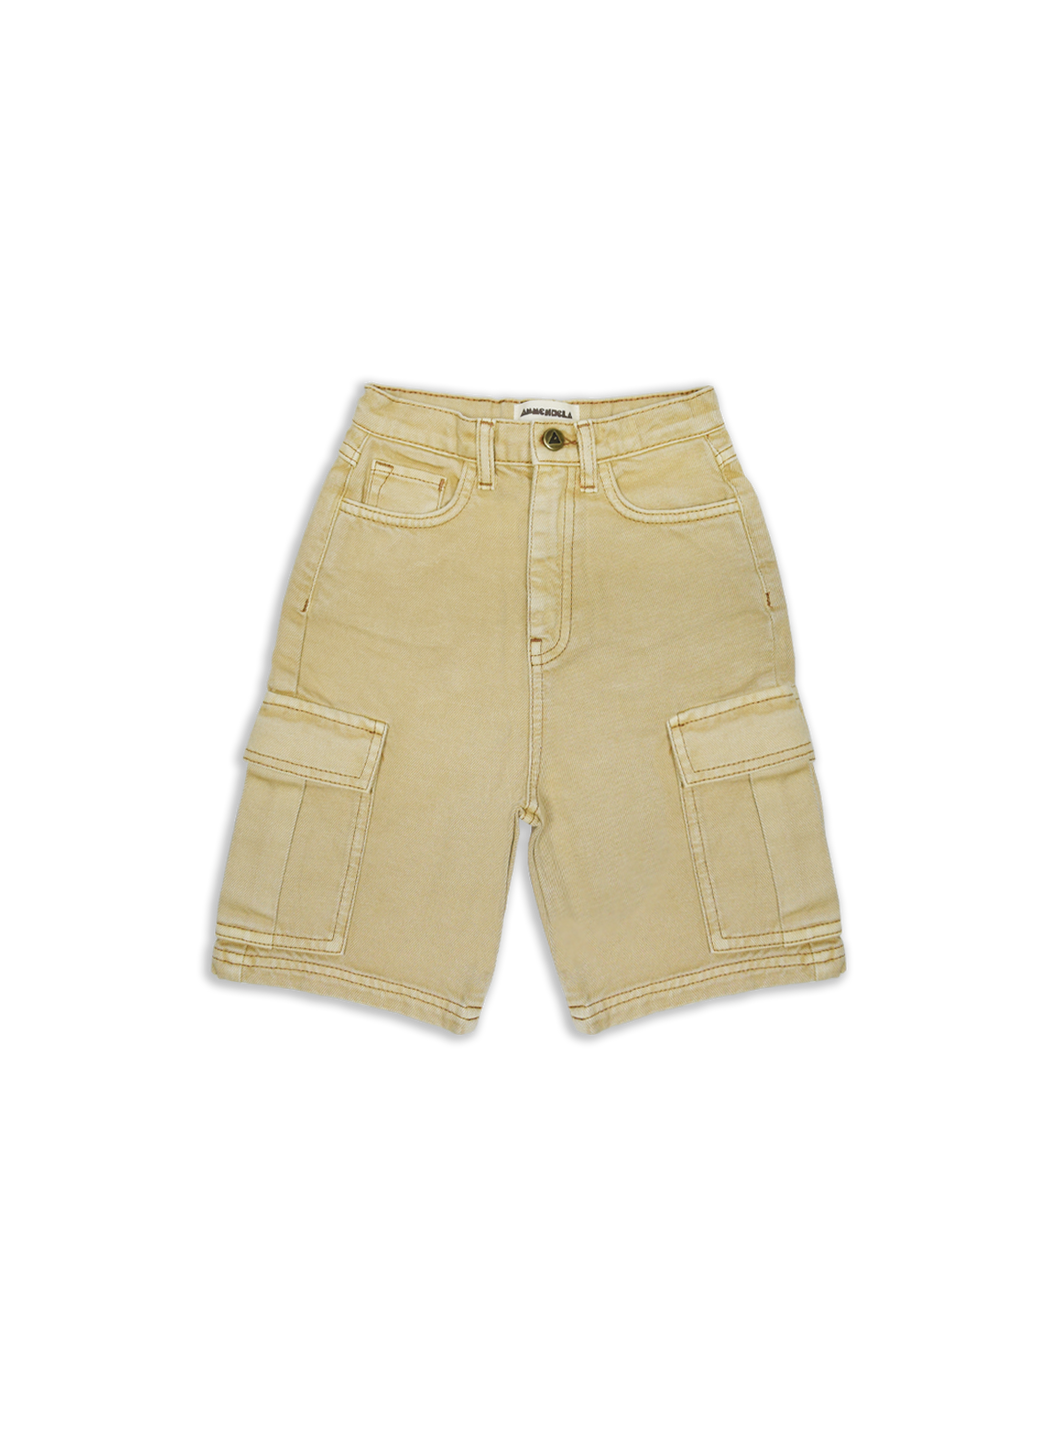 Ammehoela Jeans Shorts Jones Warm Sands